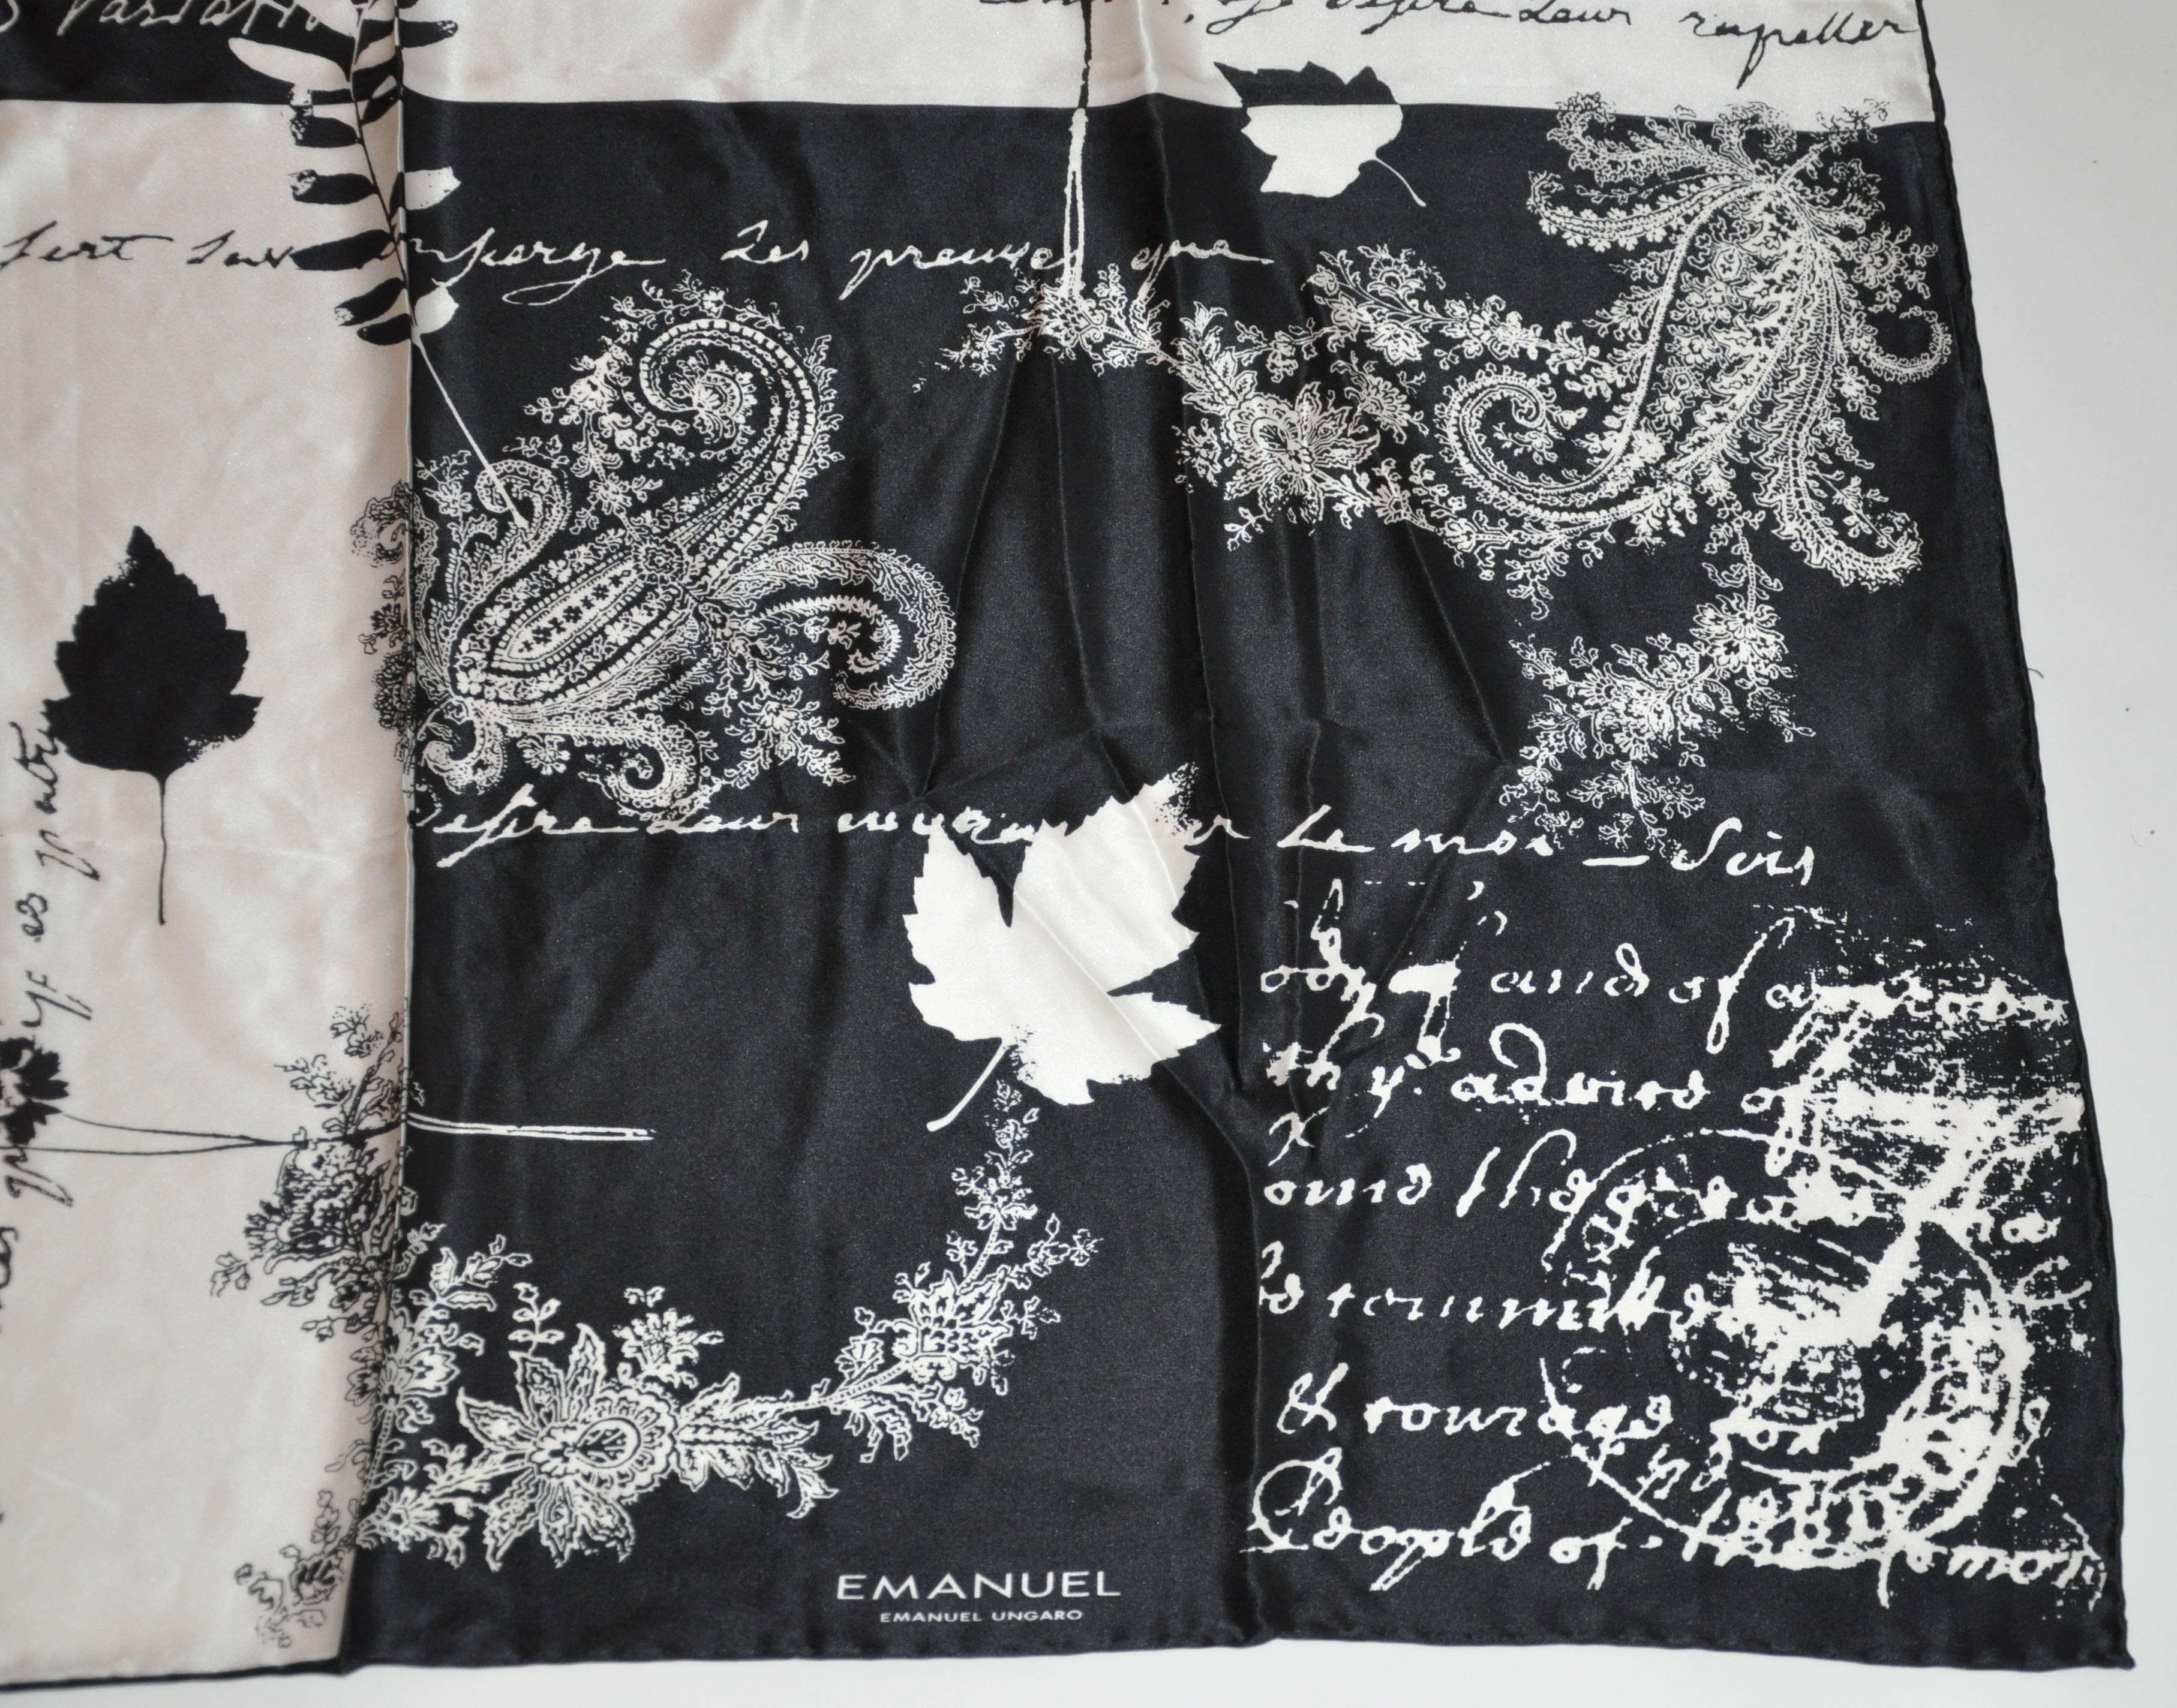         Emanuel Ungaro wonderful black & white silk scarf is filled with wonderful writings of positive feelings and measures 34